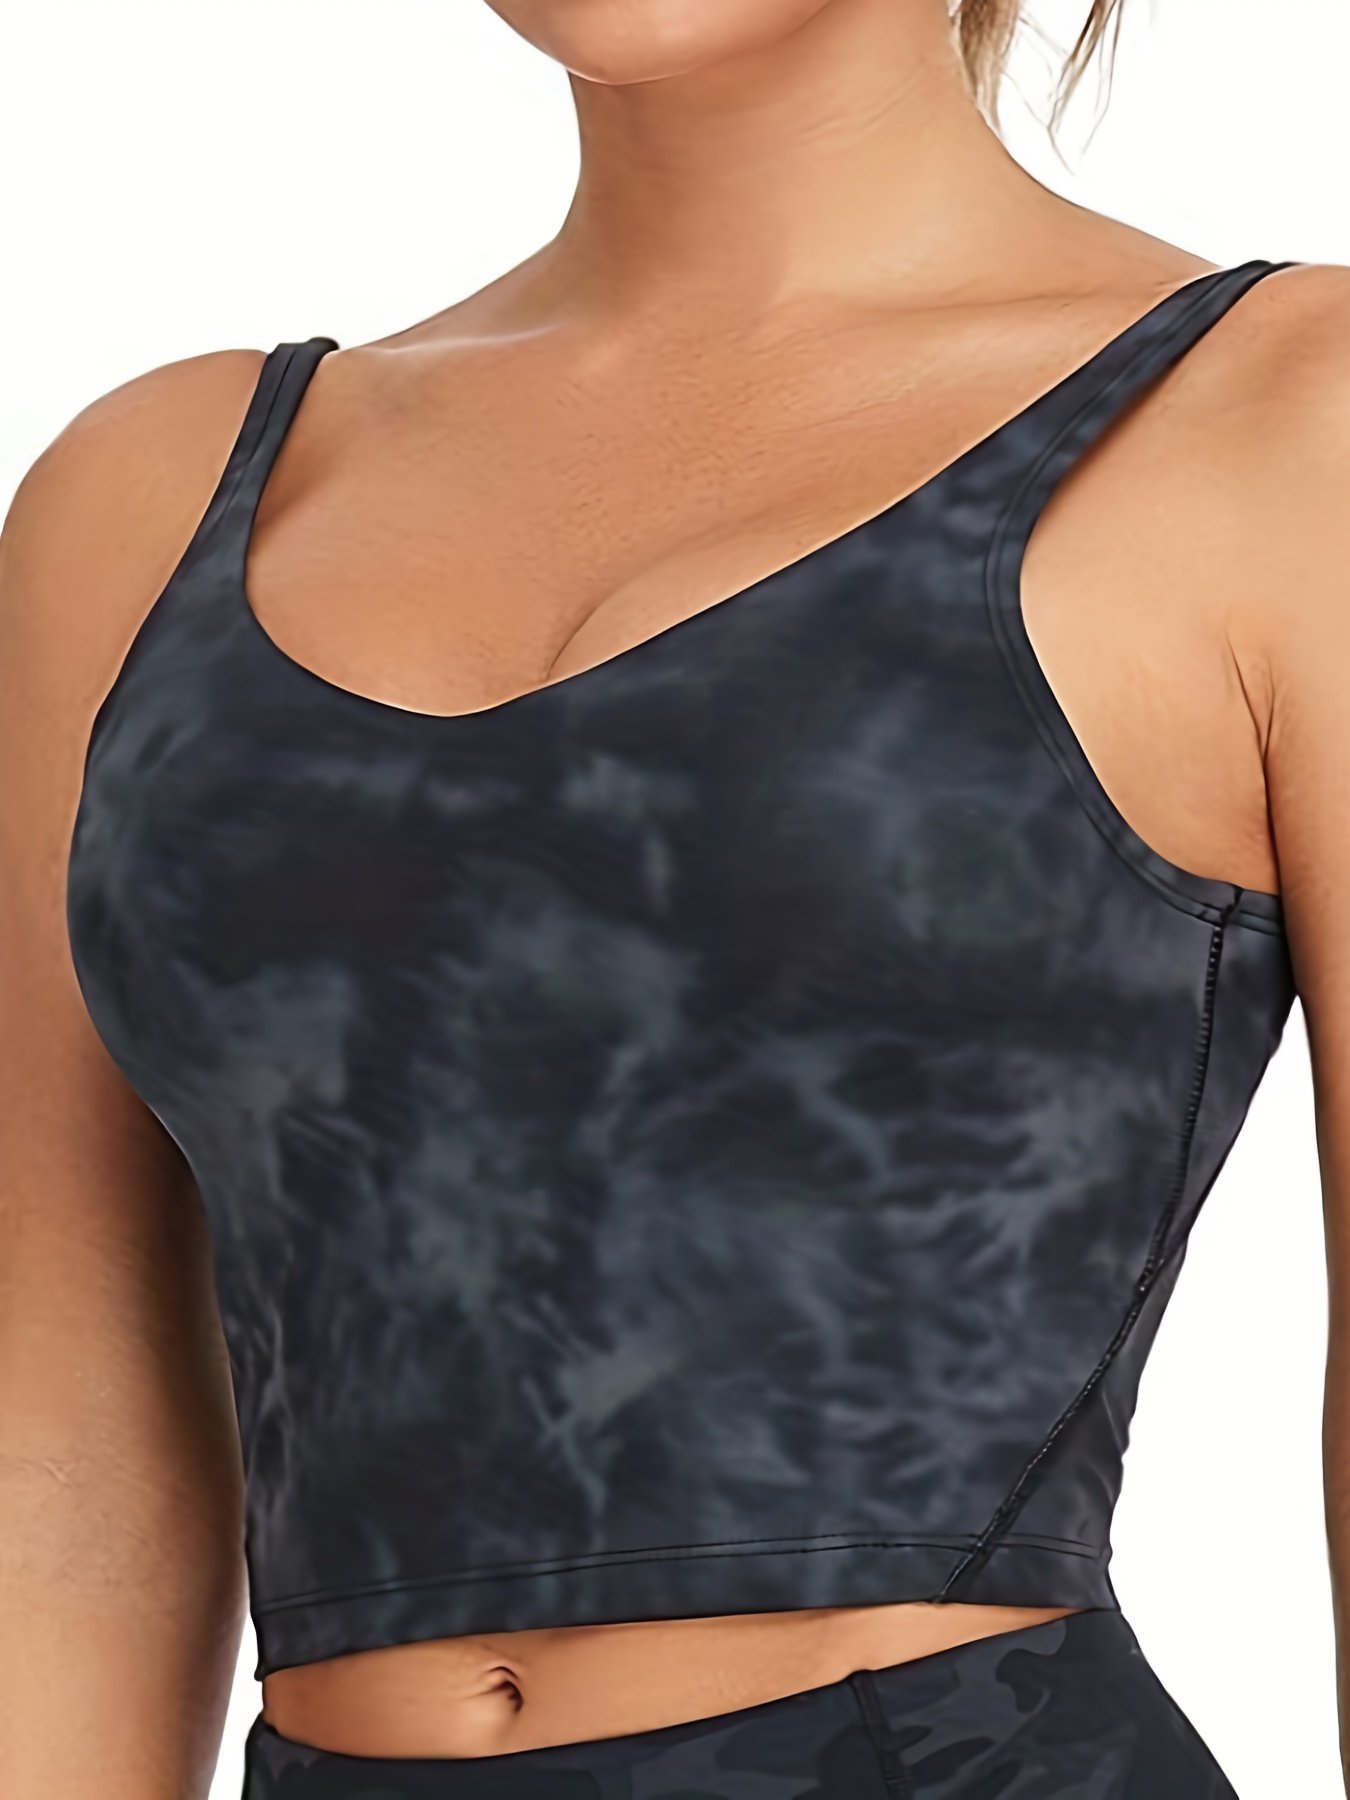 Lululemon Women's Tank Top Shirt Connected Sports Bra Yoga Purple